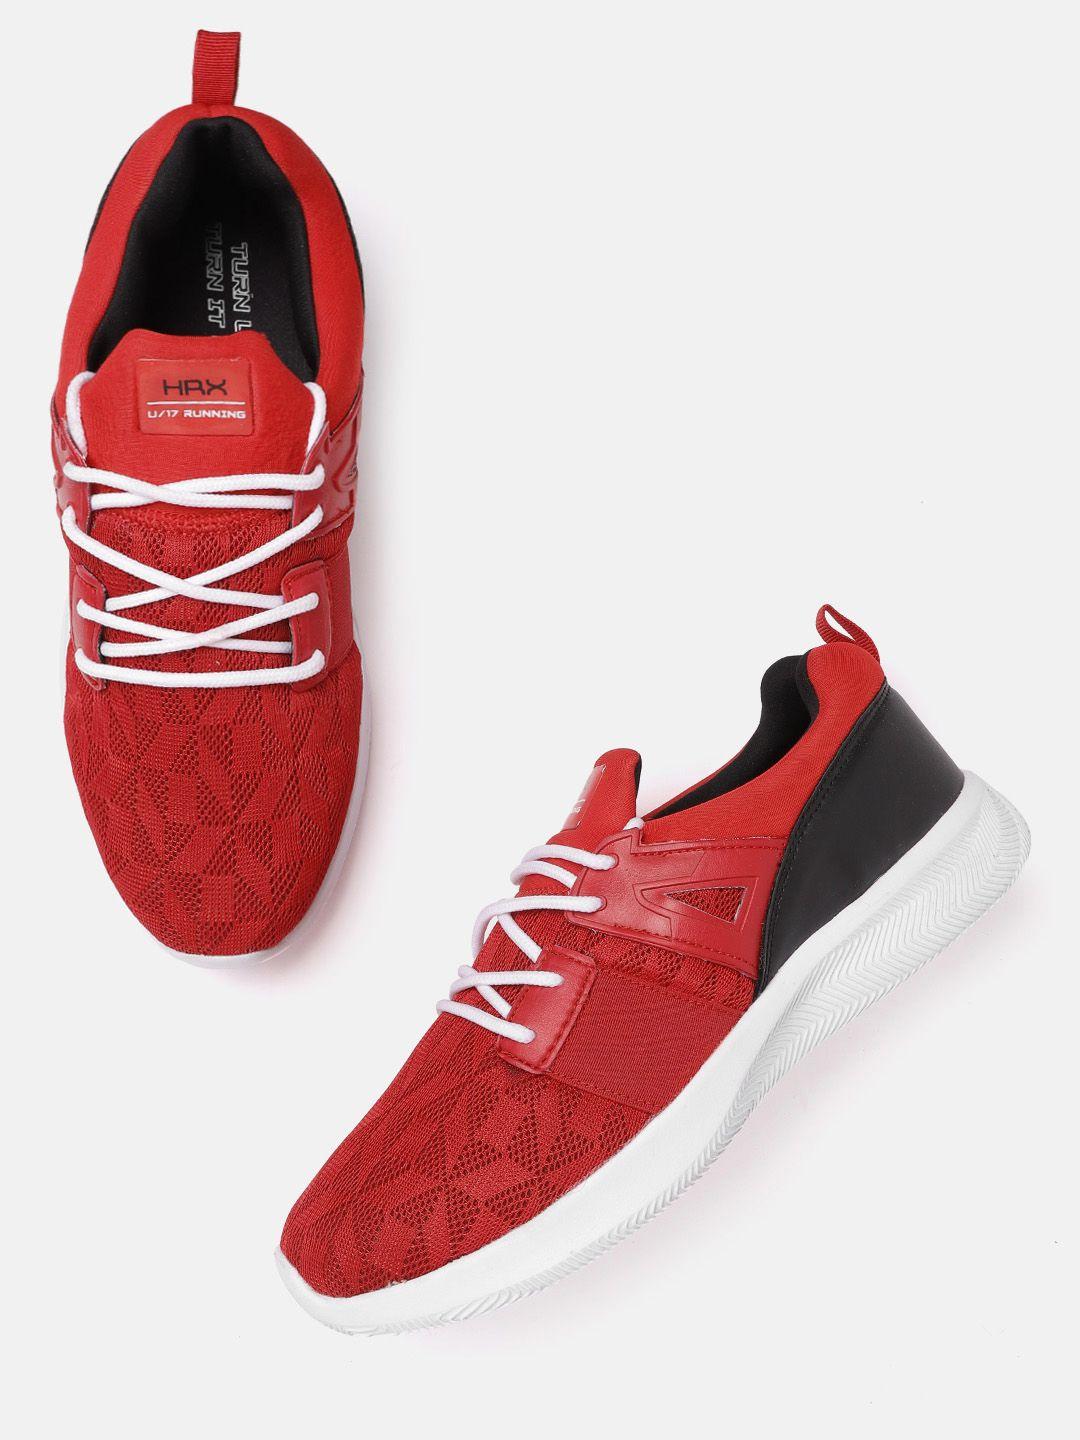 hrx by hrithik roshan u-17 unisex red woven design running shoes